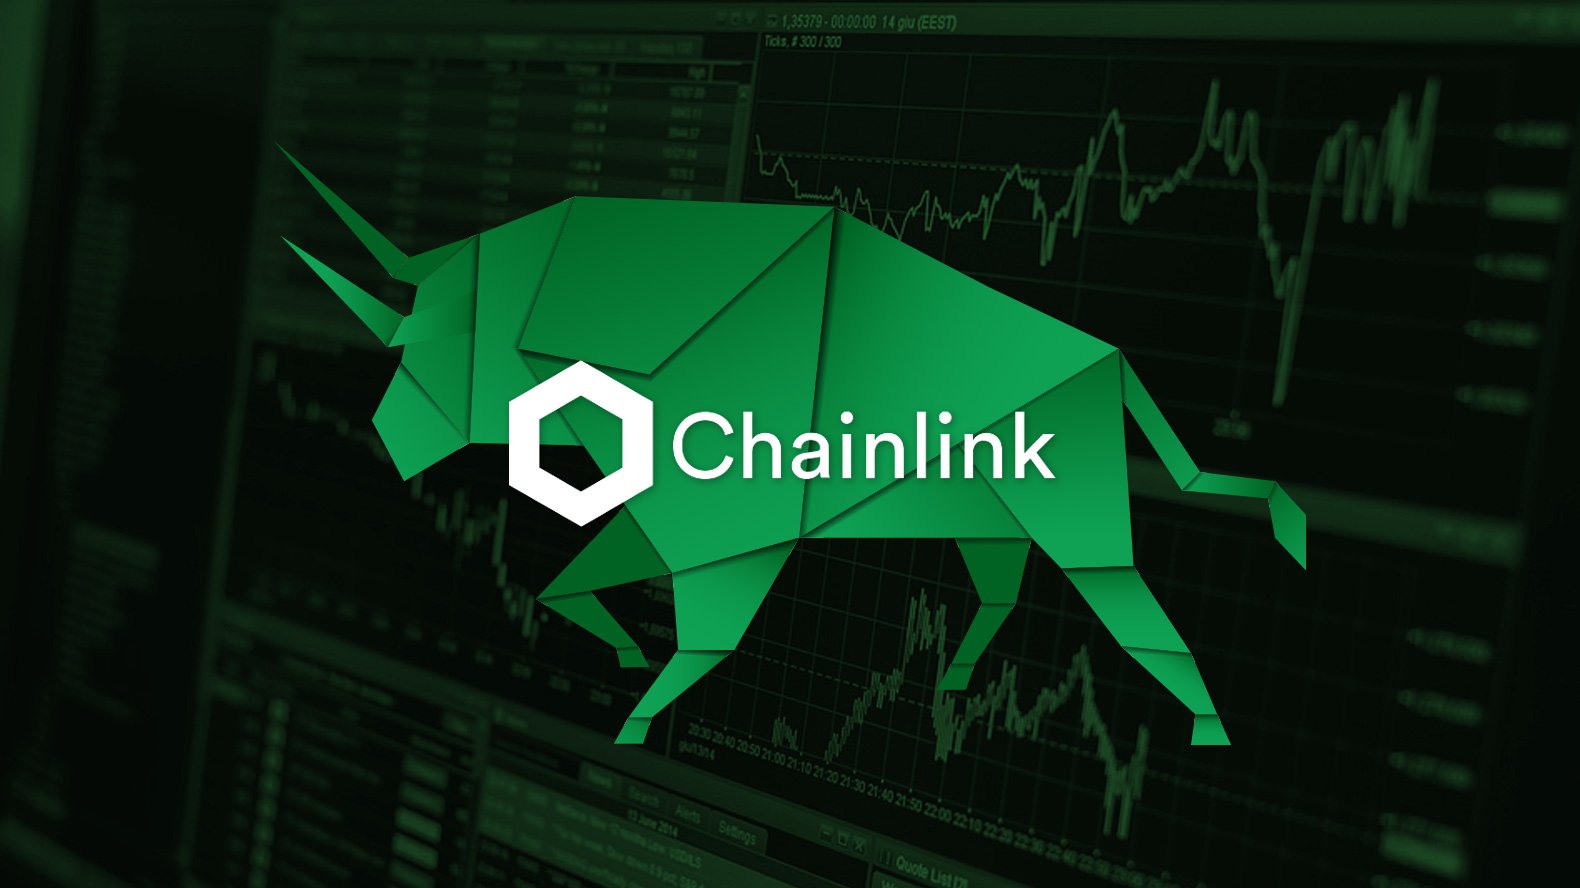 chainlink price analysis bullish - [Chainlink [LINK رکورد جدیدی را همزمان با سقوط سایر کوین های برجسته دیگر ثبت می کند!